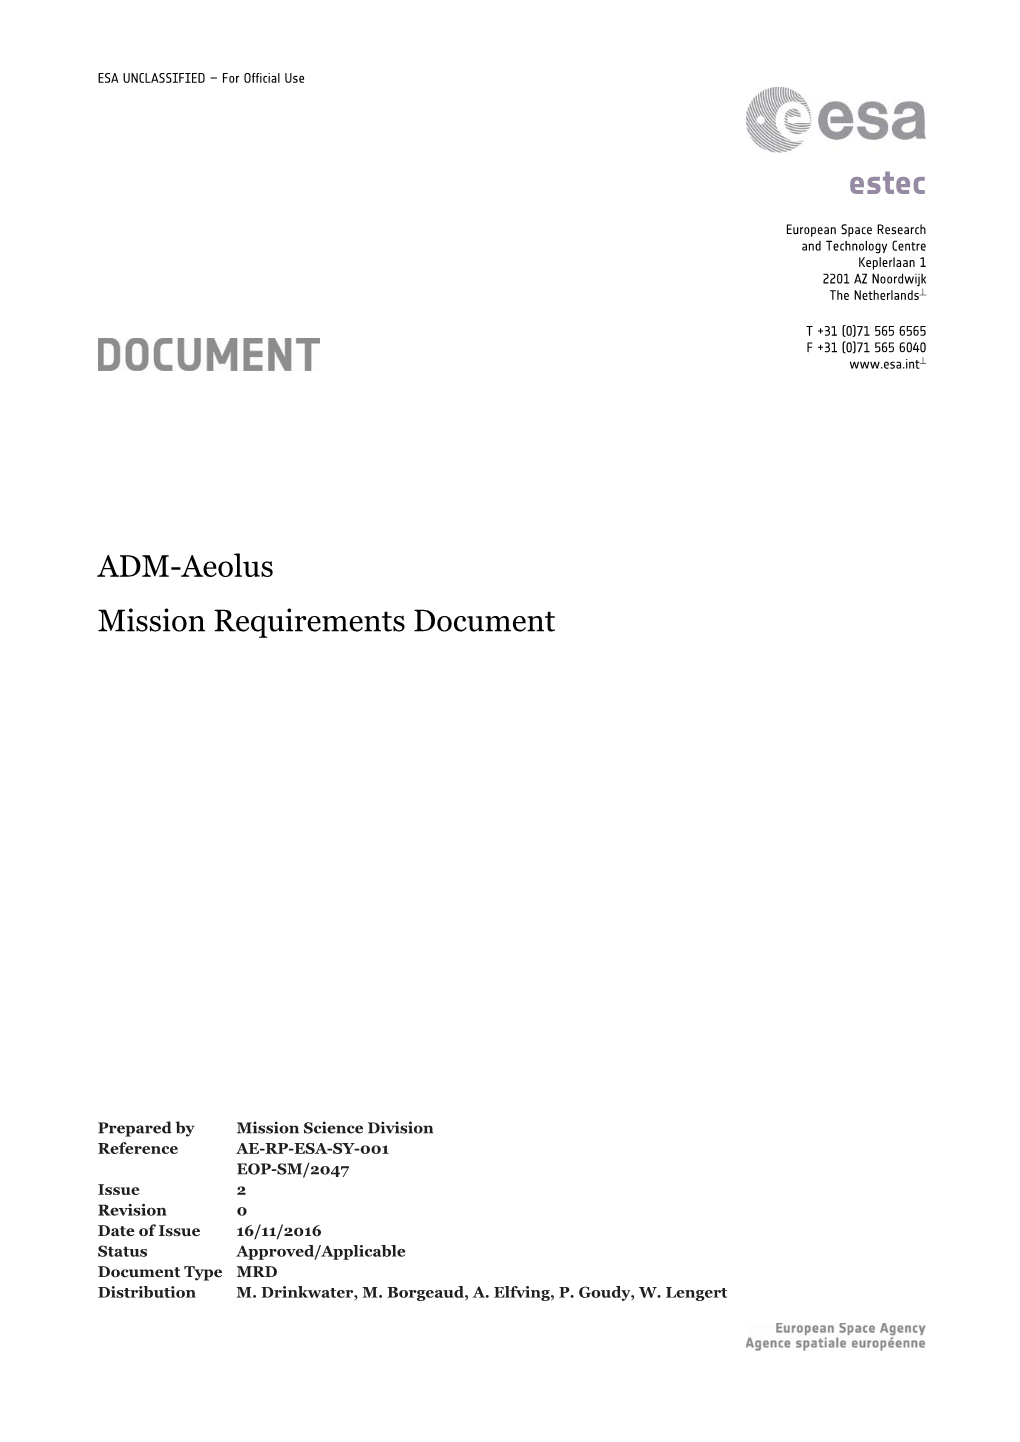 ADM-Aeolus Mission Requirements Document